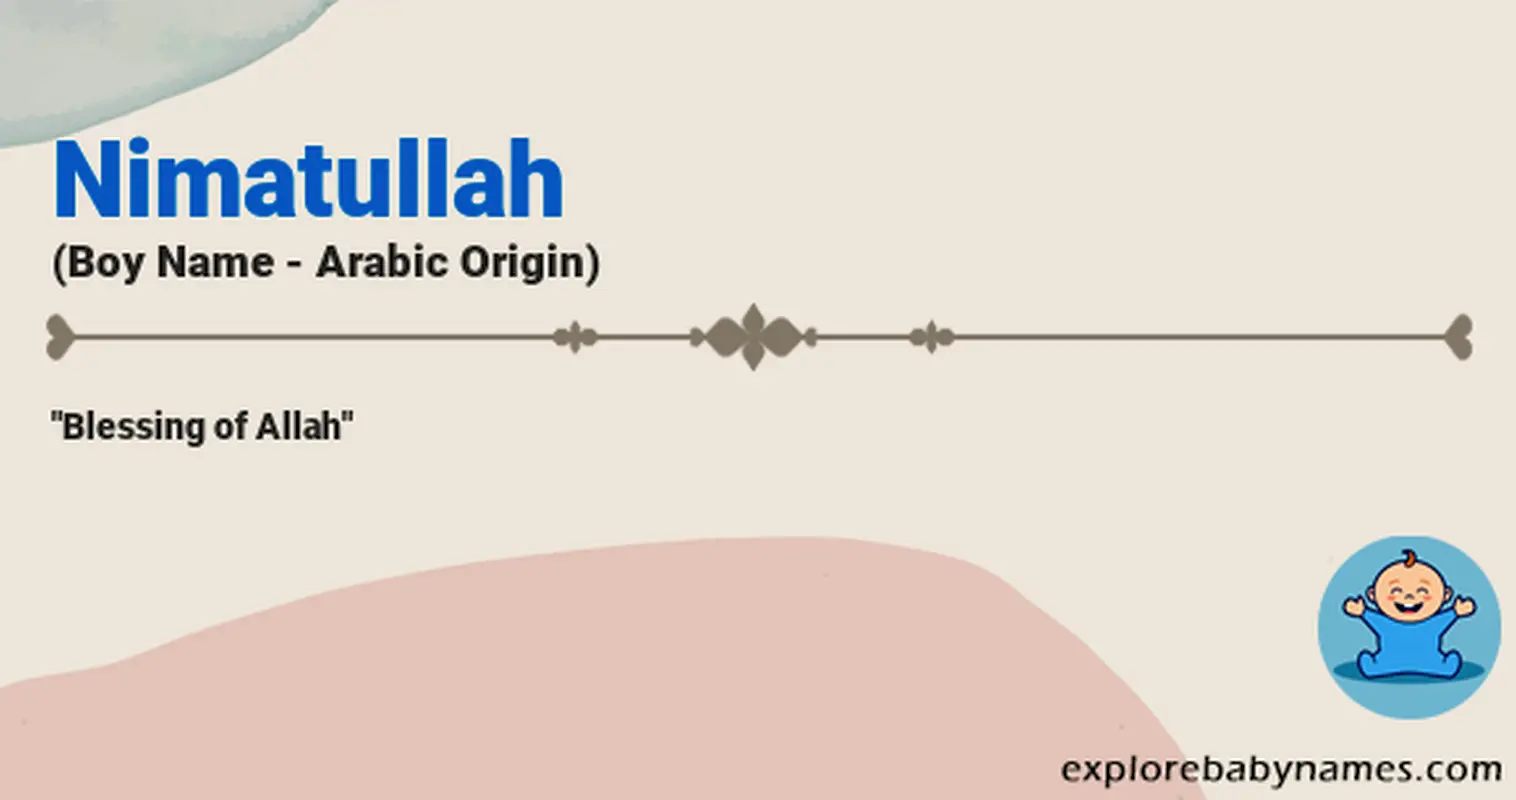 Meaning of Nimatullah